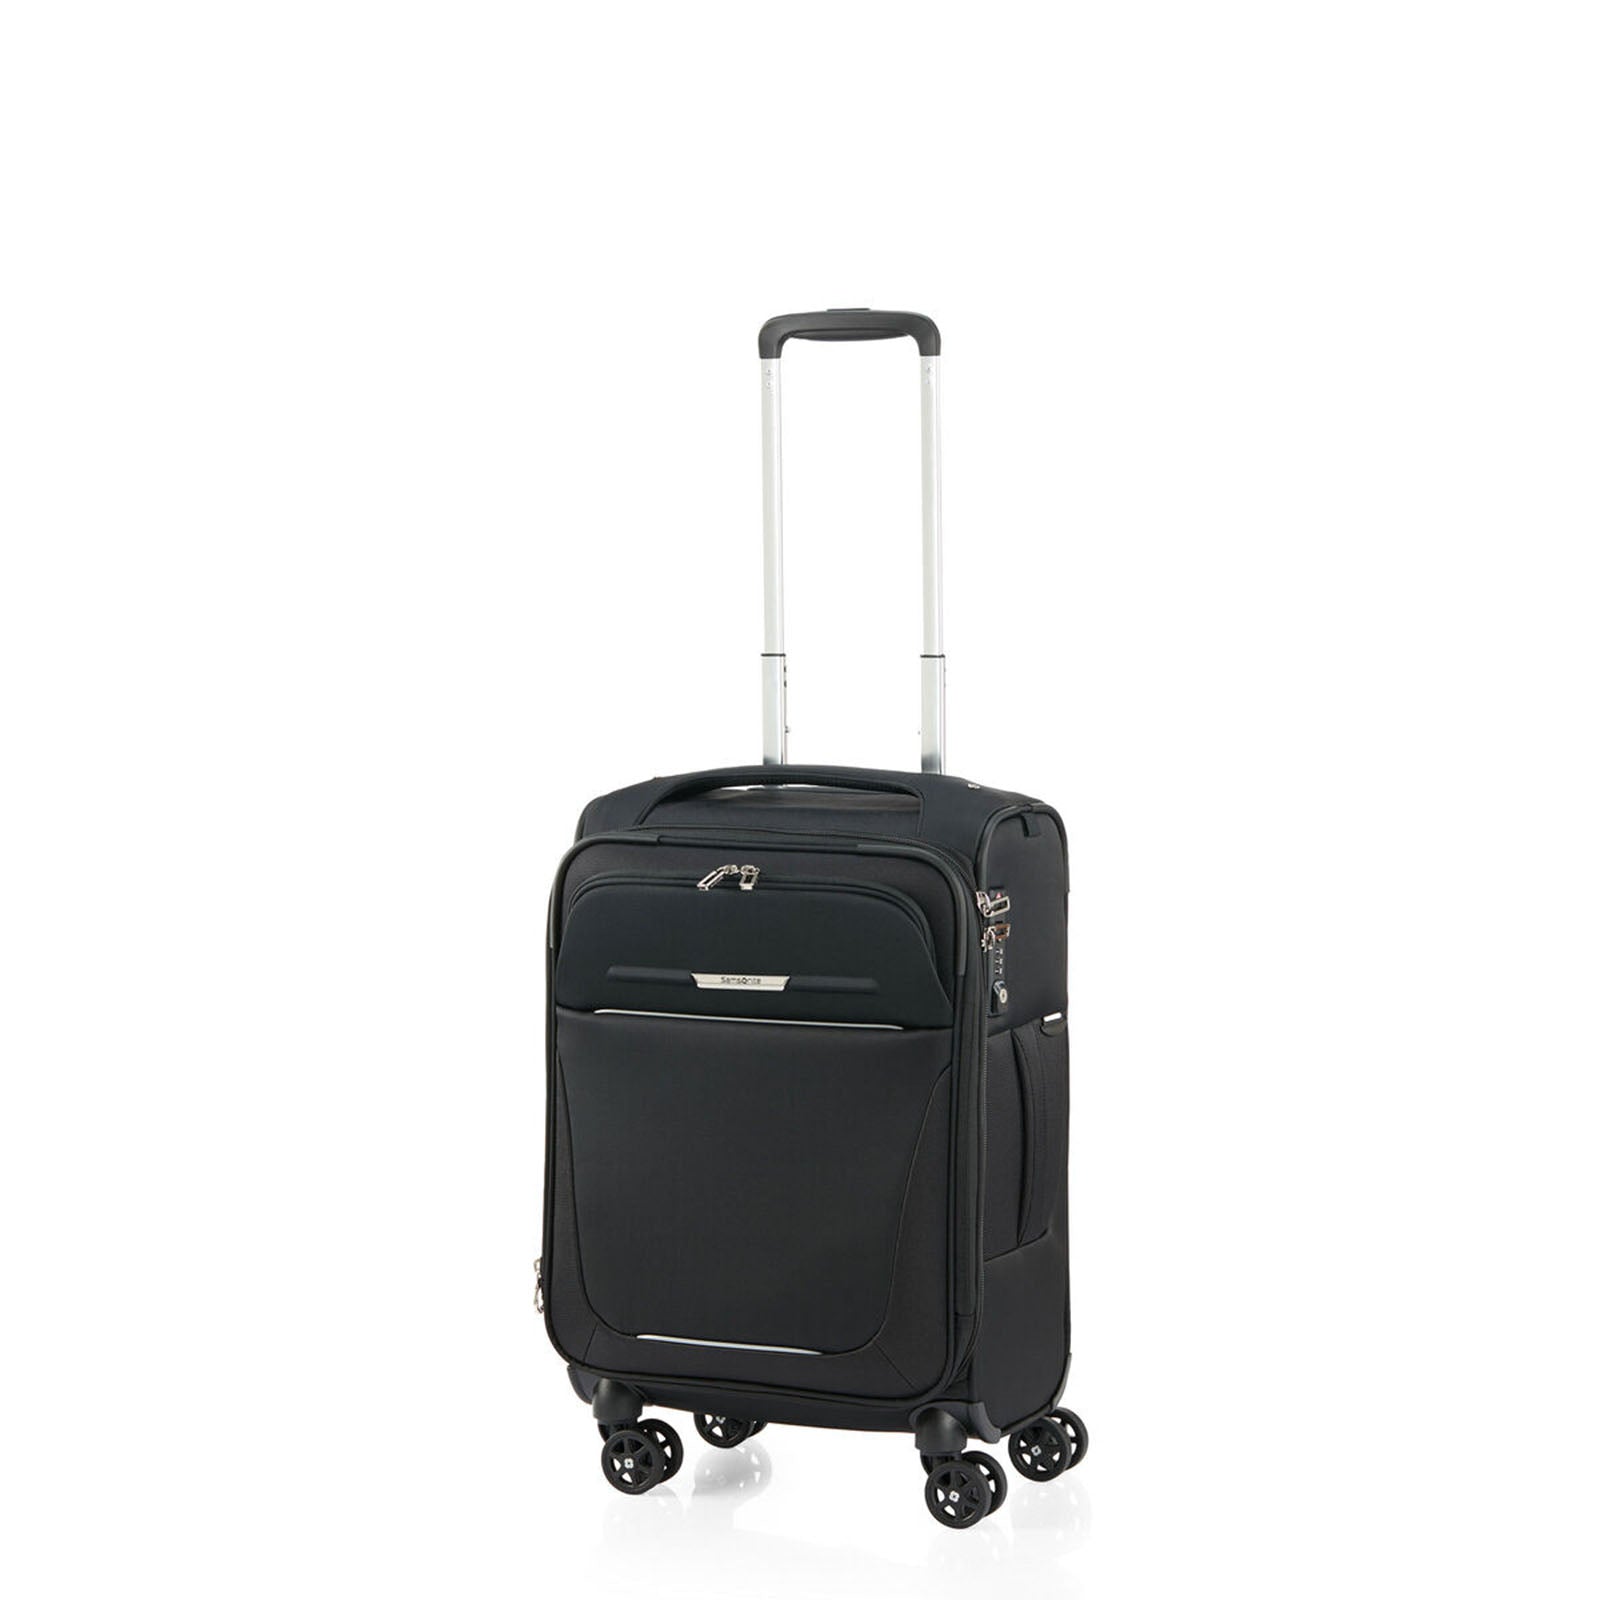 Samsonite-B-Lite-5-55cm-Suitcase-Black-Front-Angle